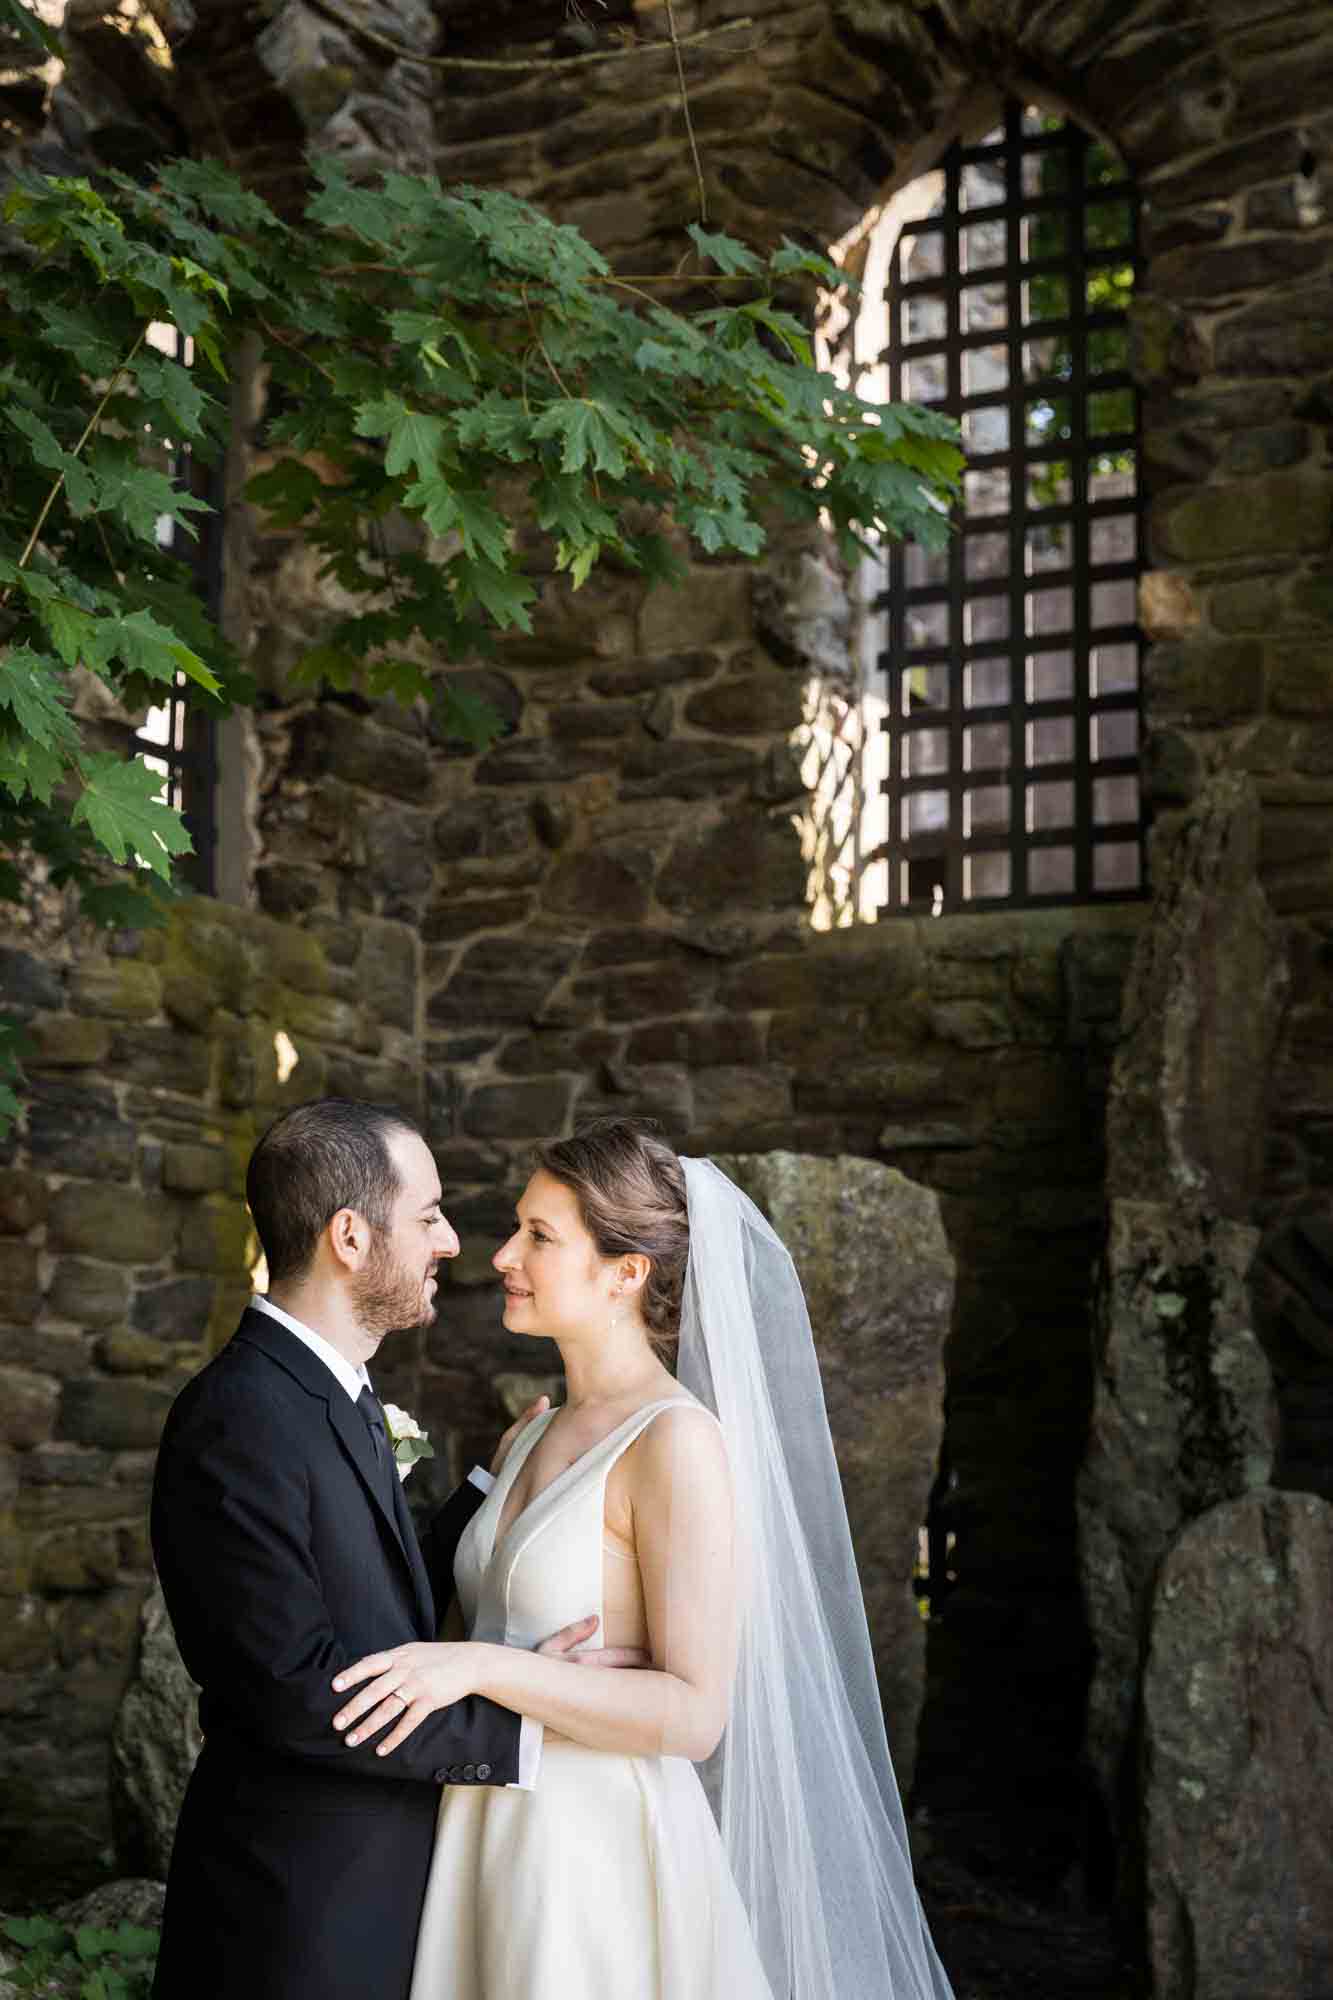 Glen Island Park wedding photo of bride and groom in front of castle ruins